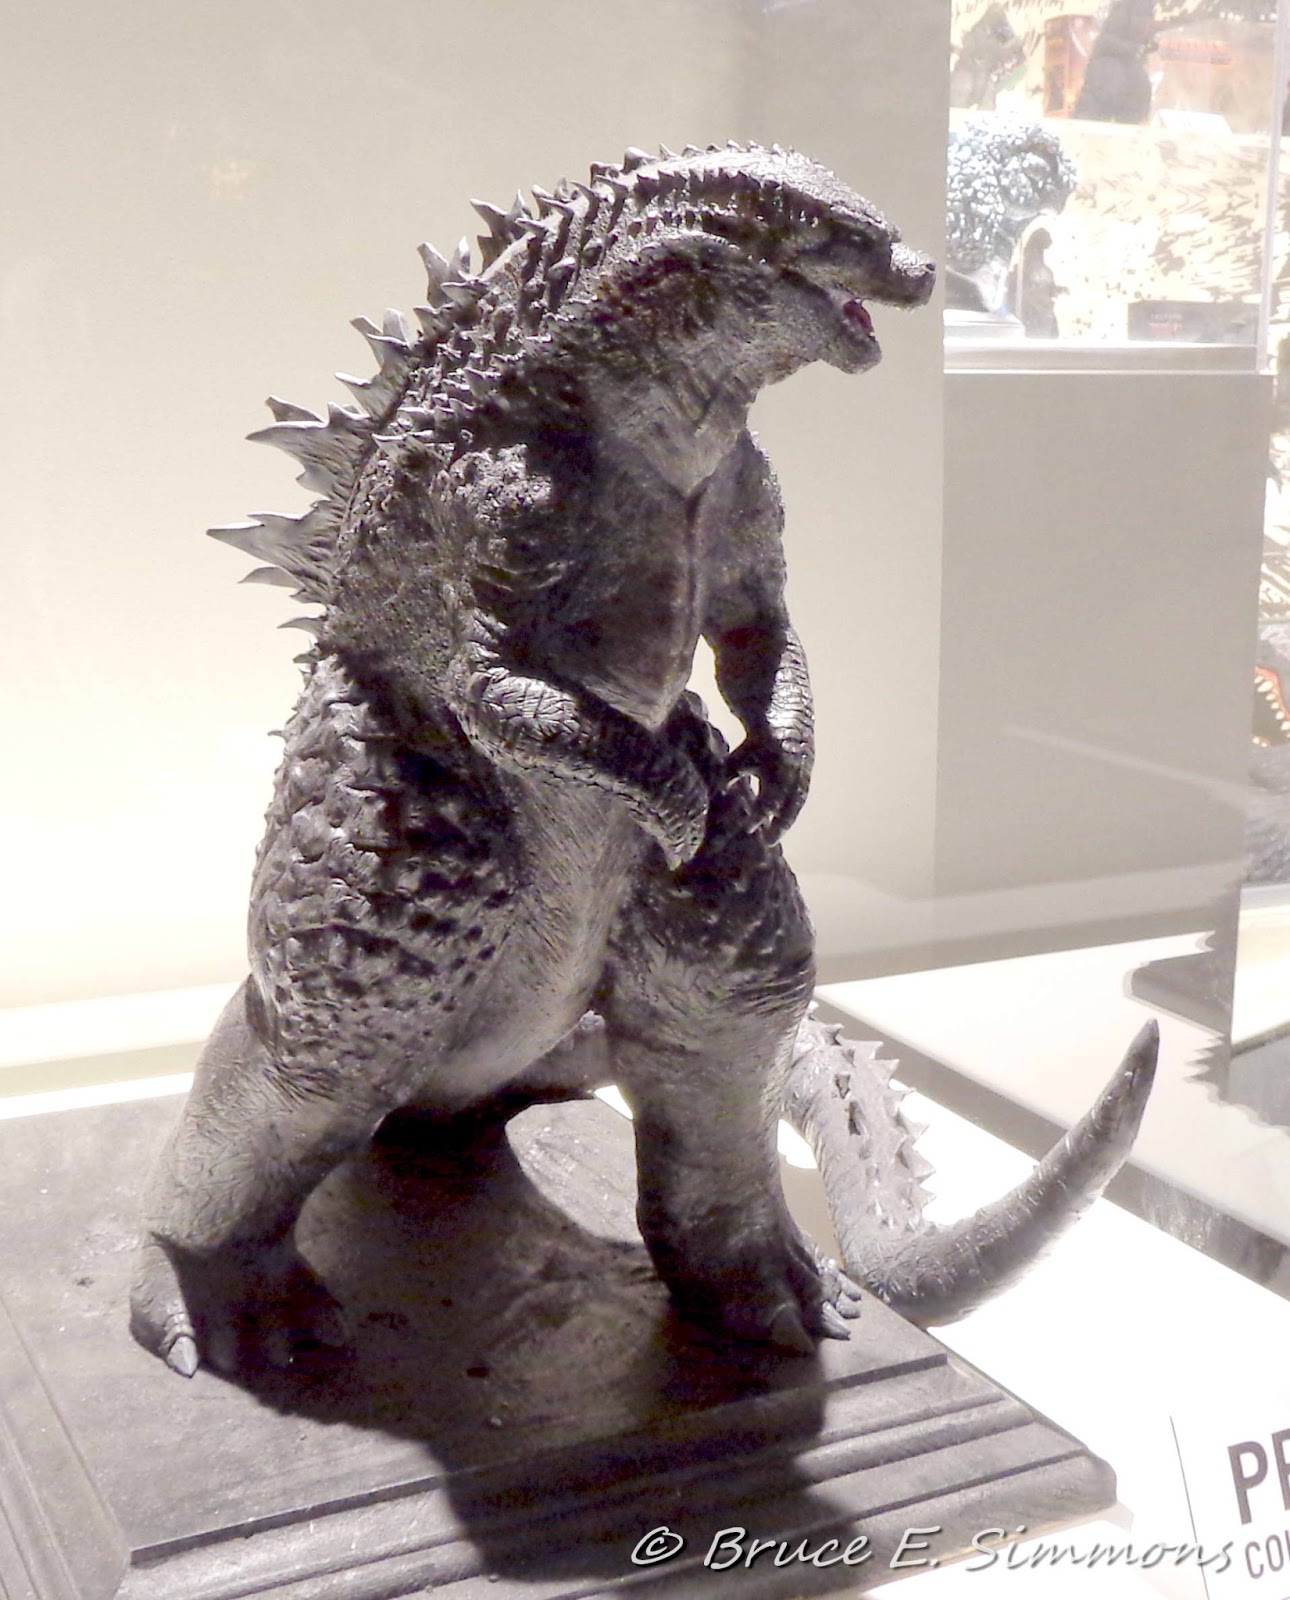 Godzilla 2014 concept model